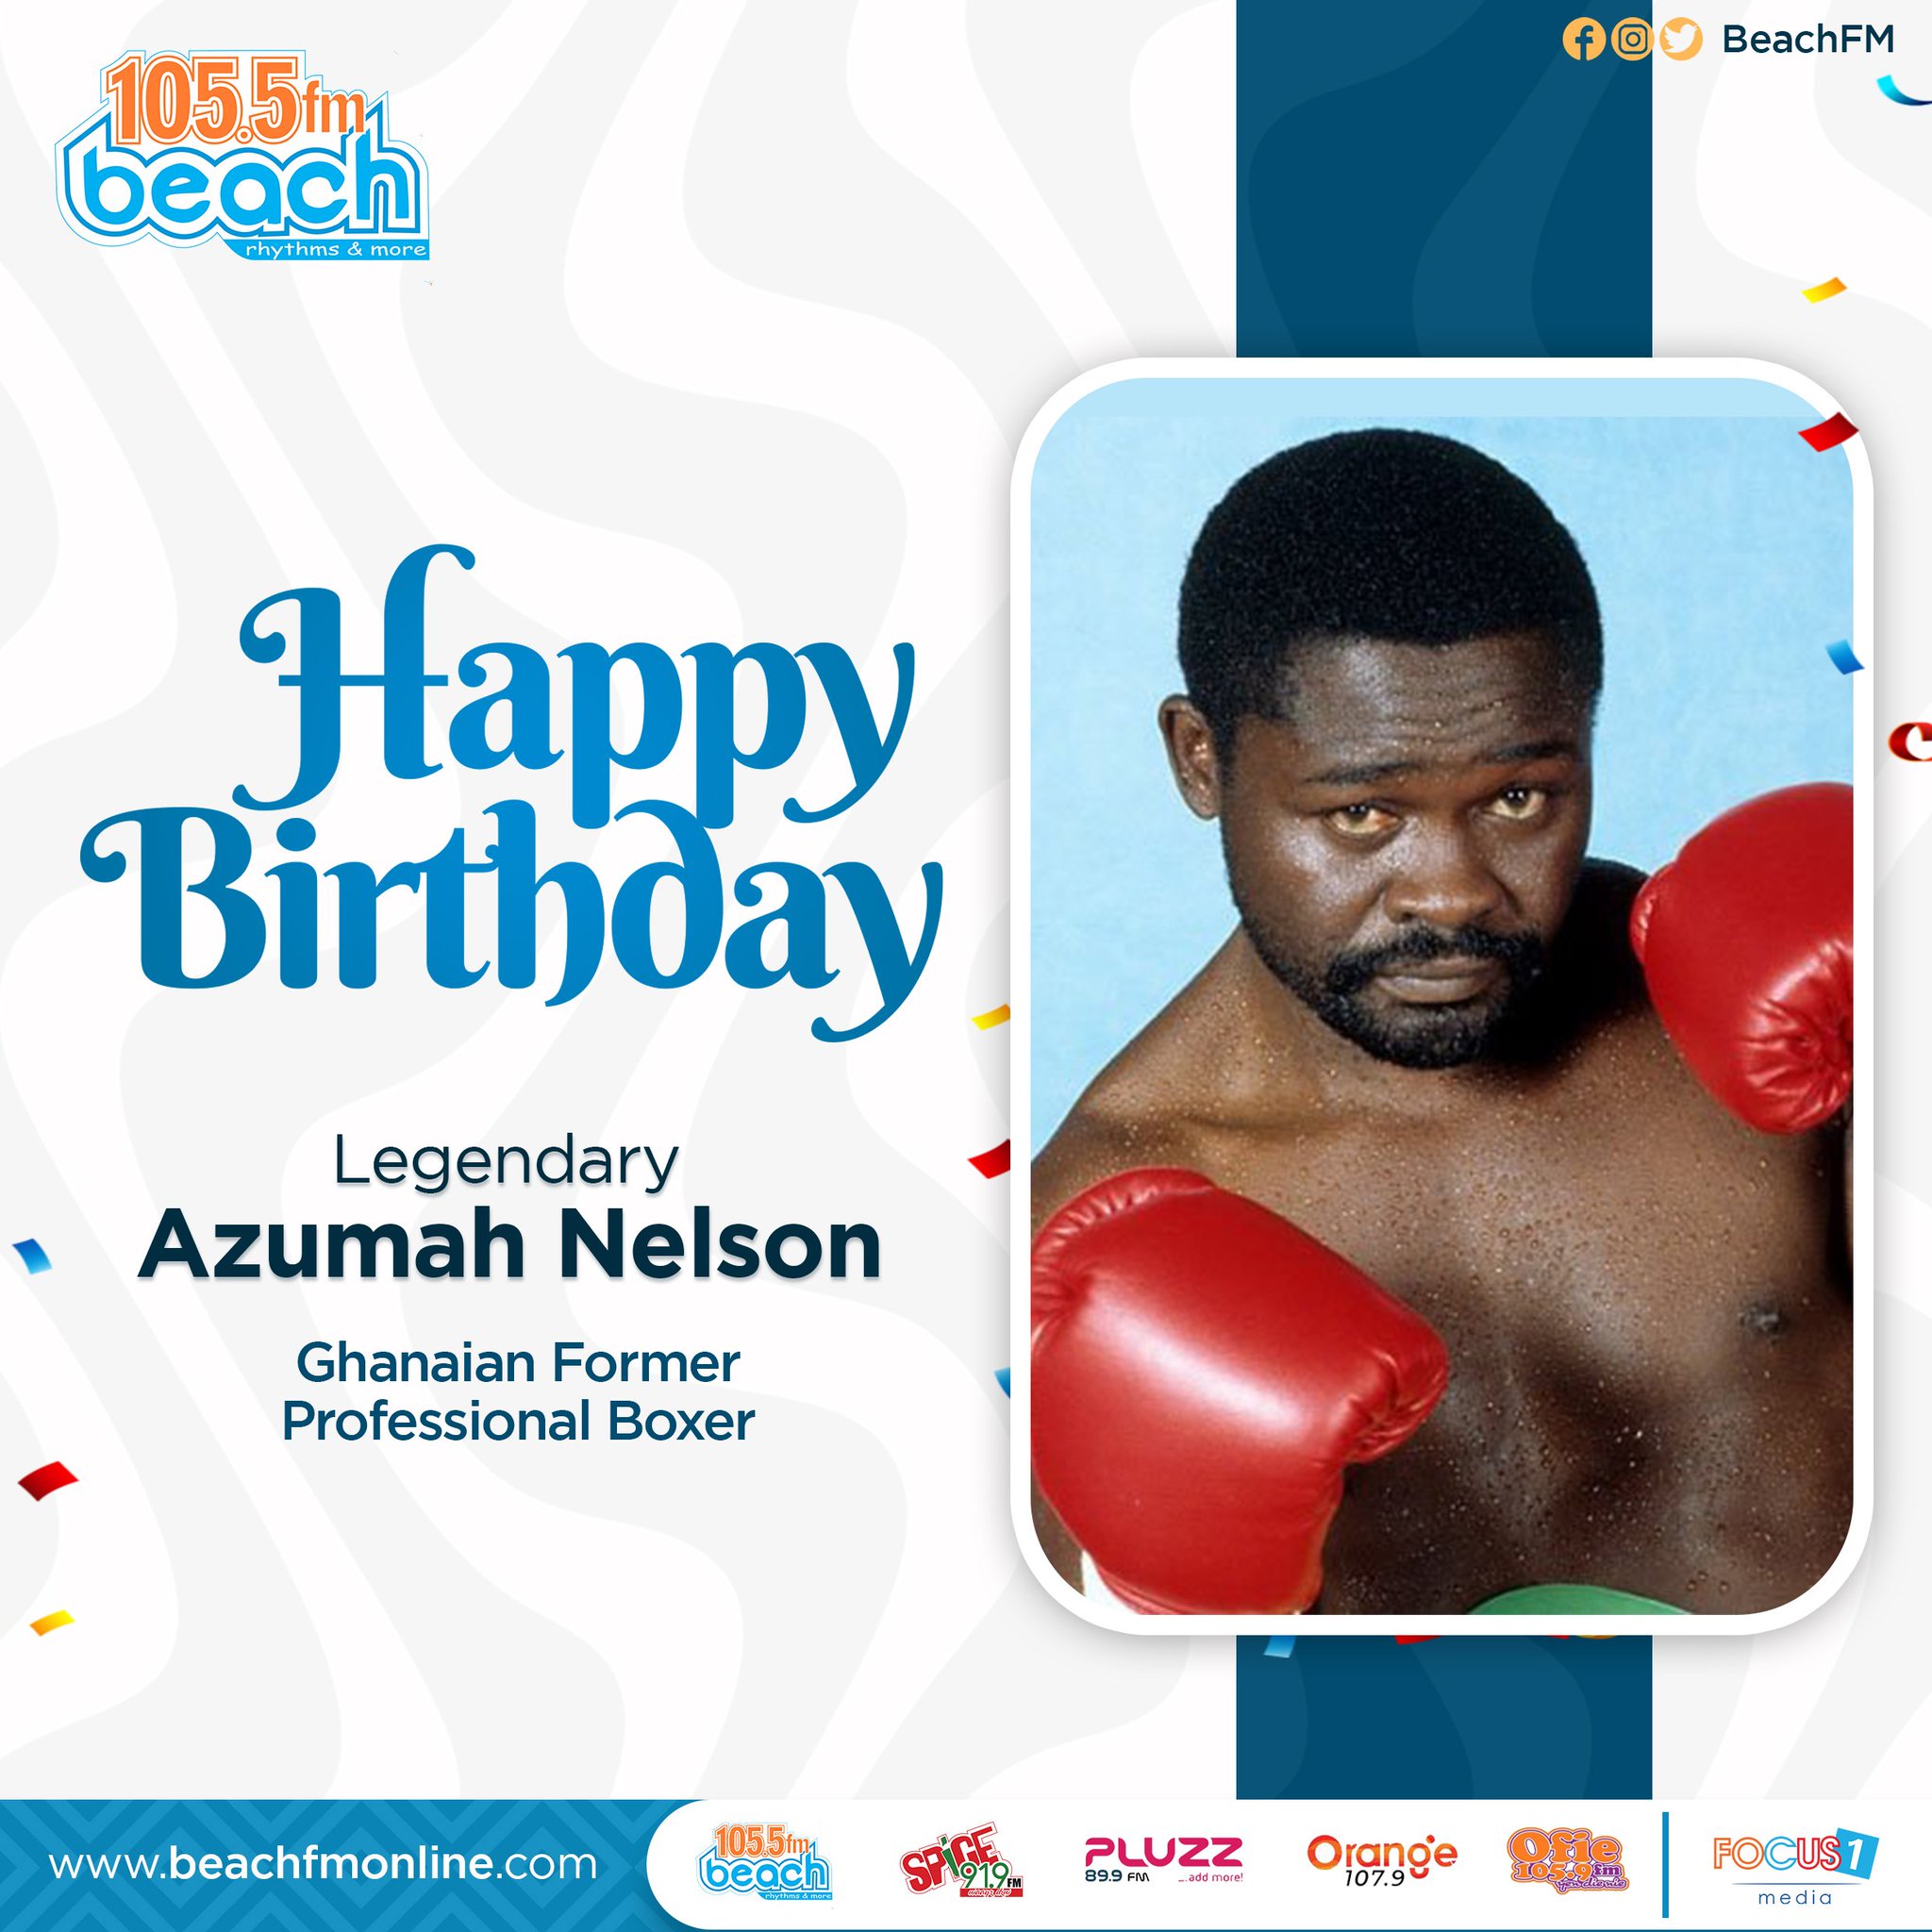 Happy birthday to the legendary Azumah Nelson! 